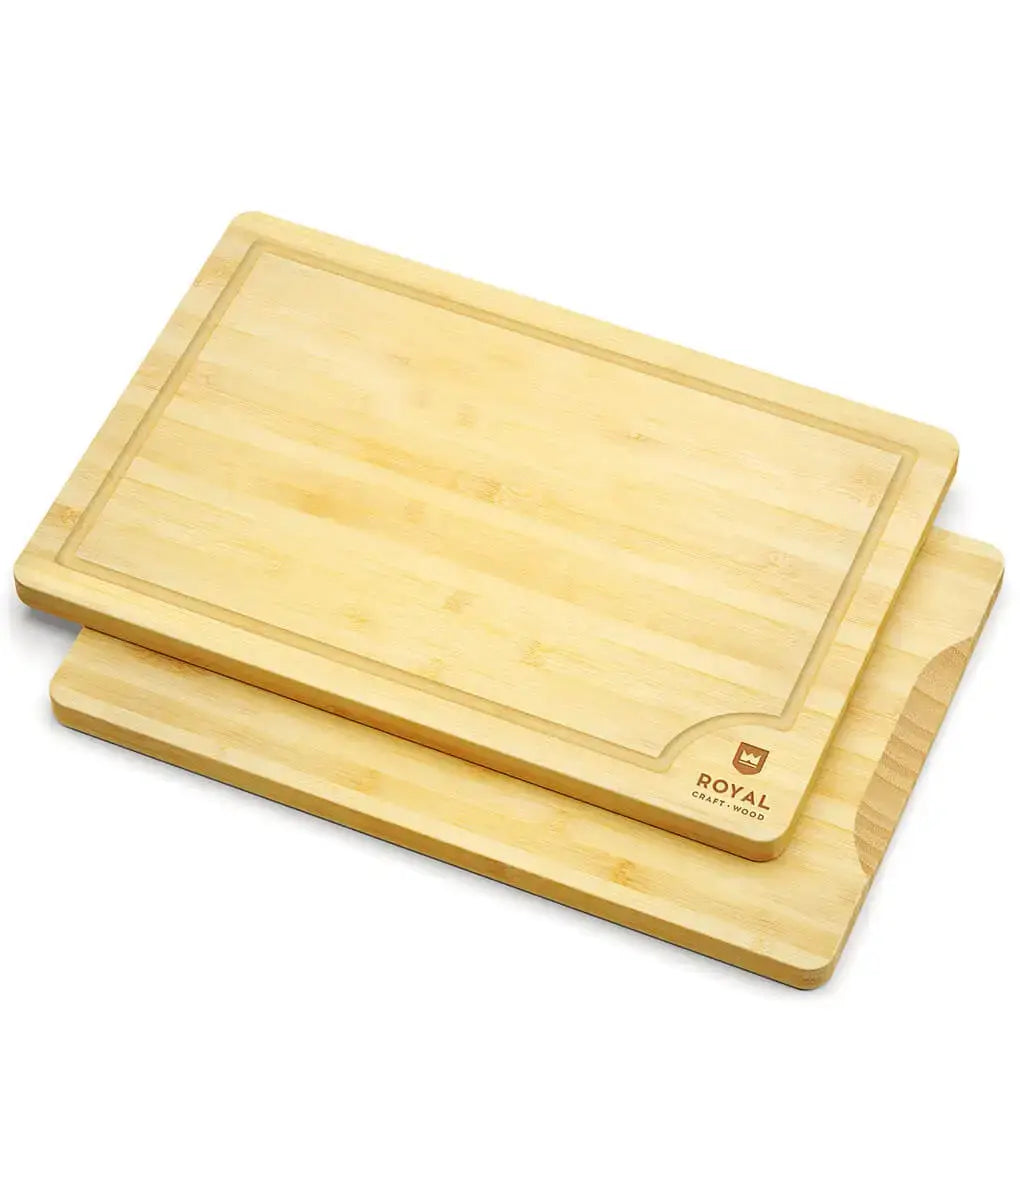 Bamboo cutting board 12x18